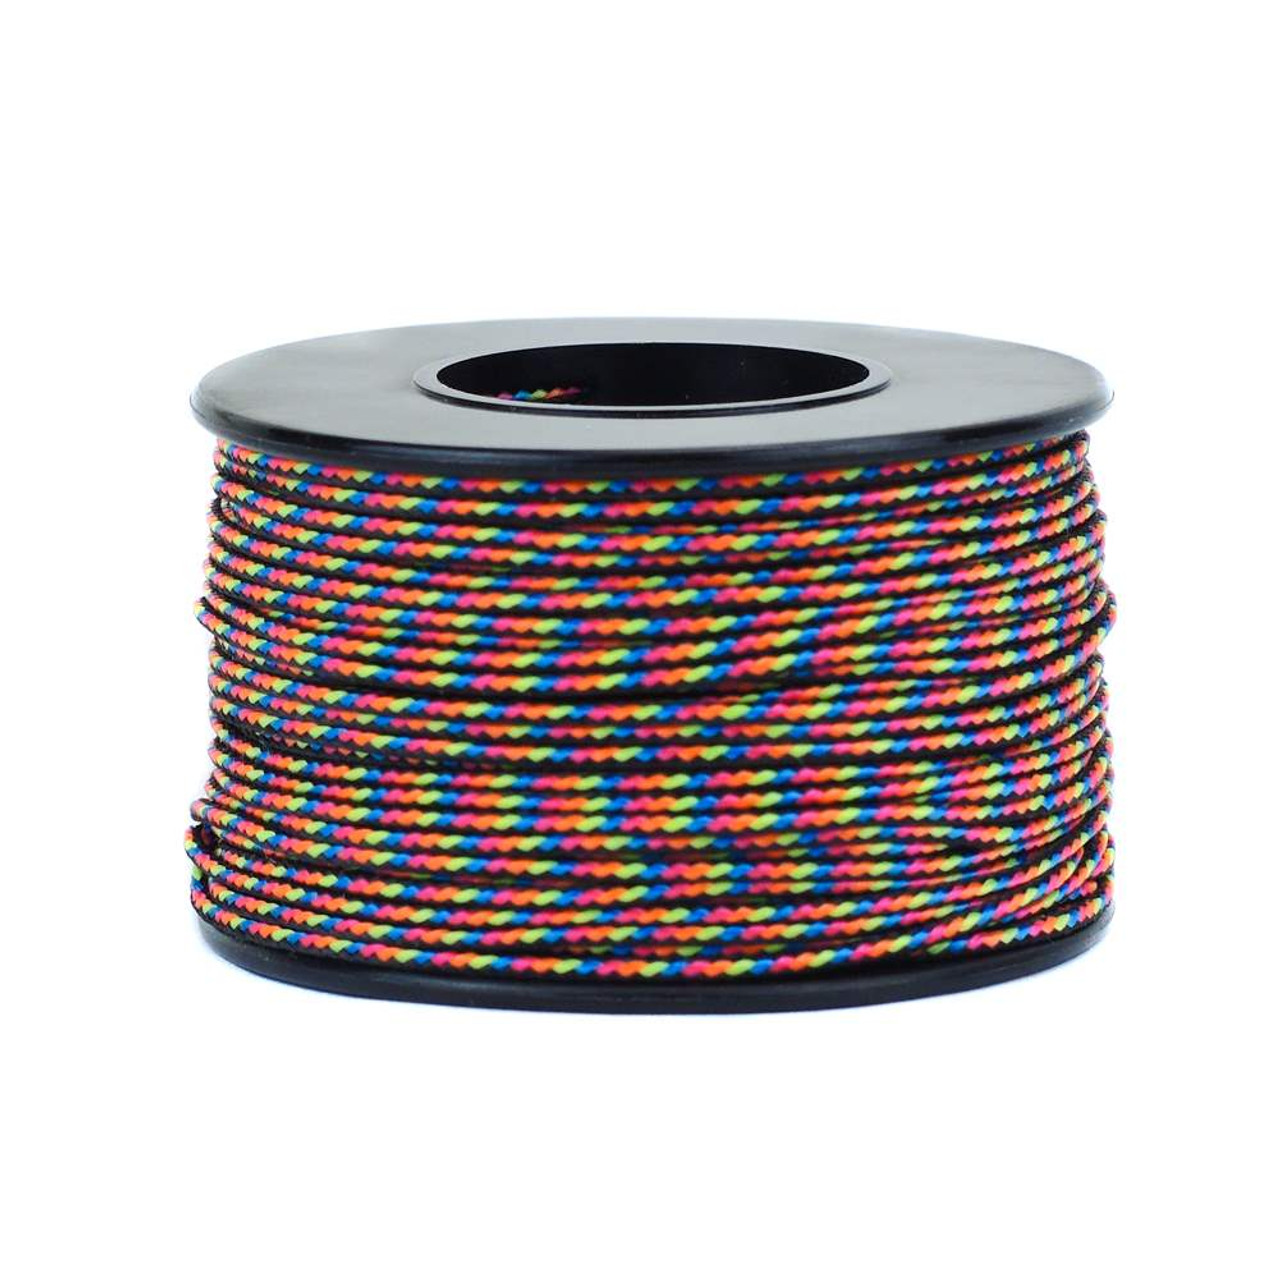 Dark Stripes Micro Cord - 125 Feet